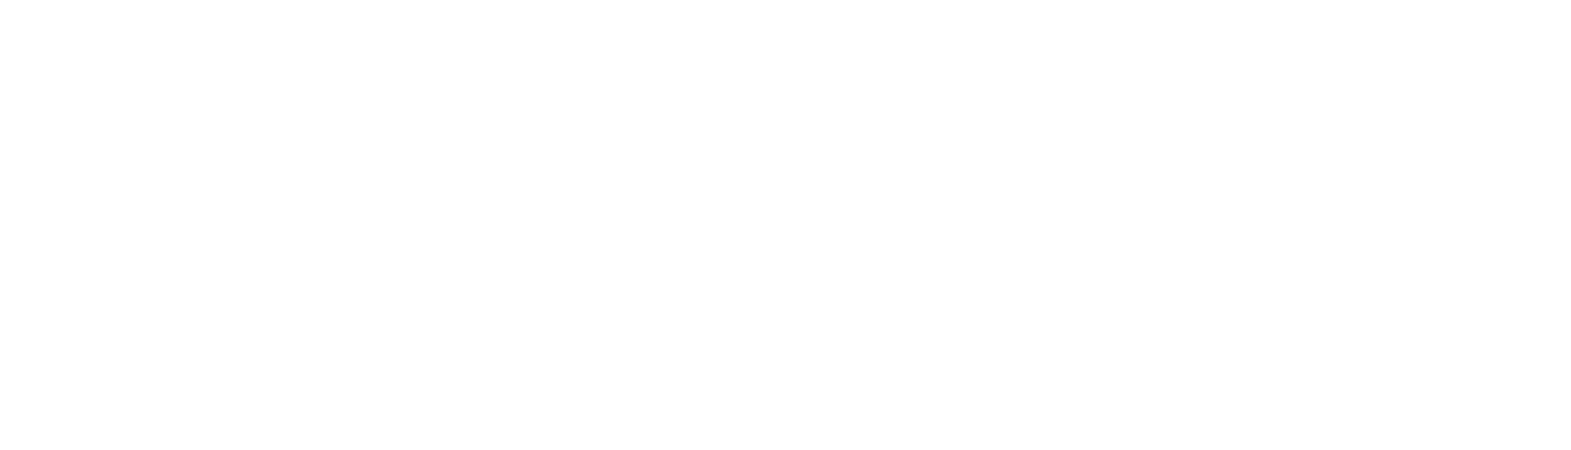 Punta Mita Hospital Fertility Center